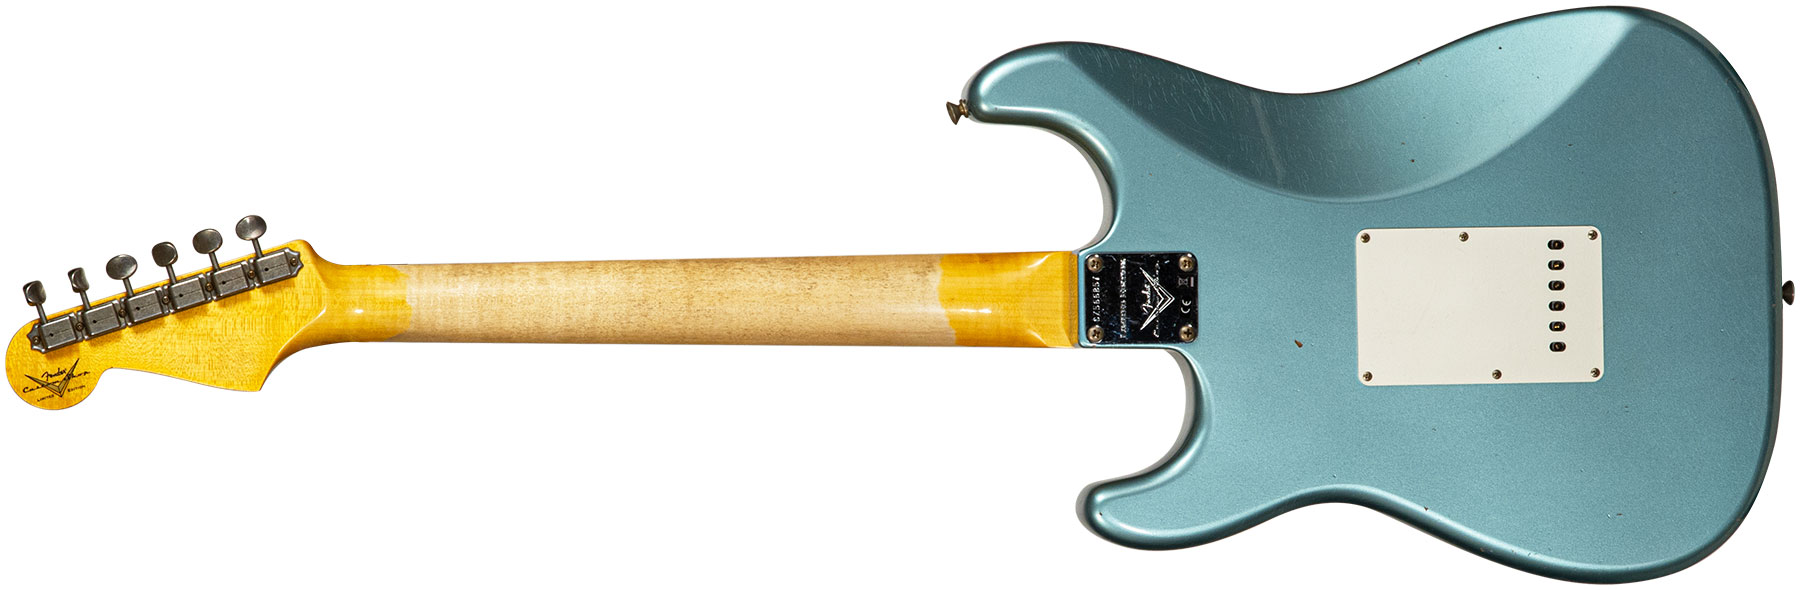 Fender Custom Shop Strat 1959 3s Trem Rw #cz566857 - Journeyman Relic Teal Green Metallic - E-Gitarre in Str-Form - Variation 1